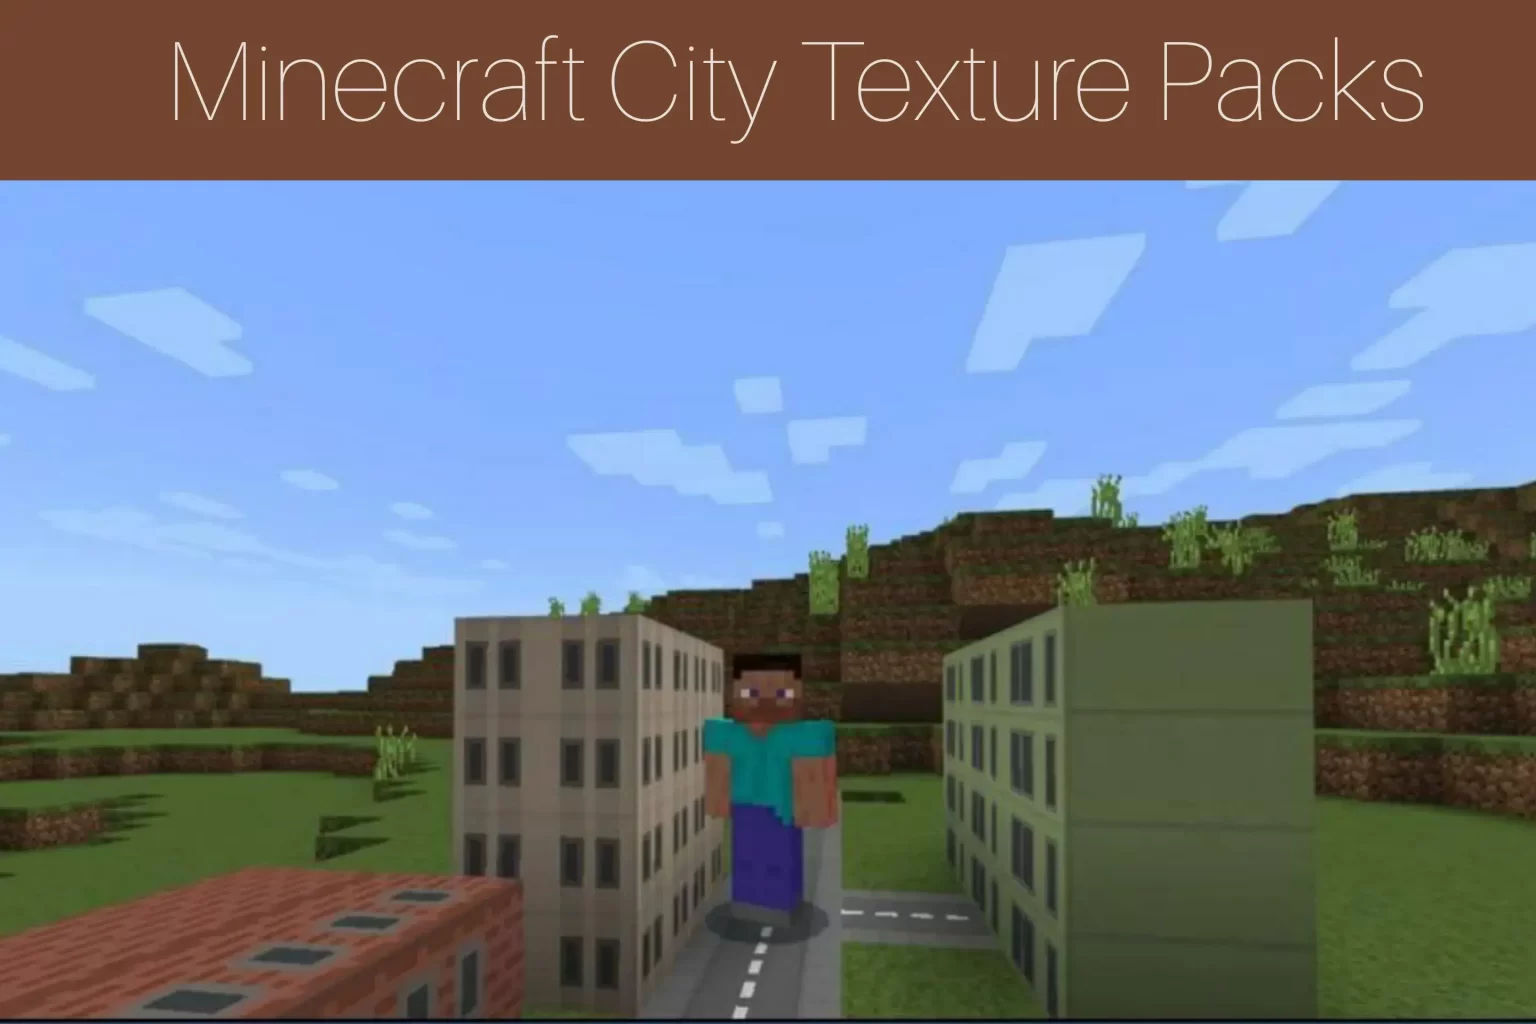 Minecraft City Texture Packs
